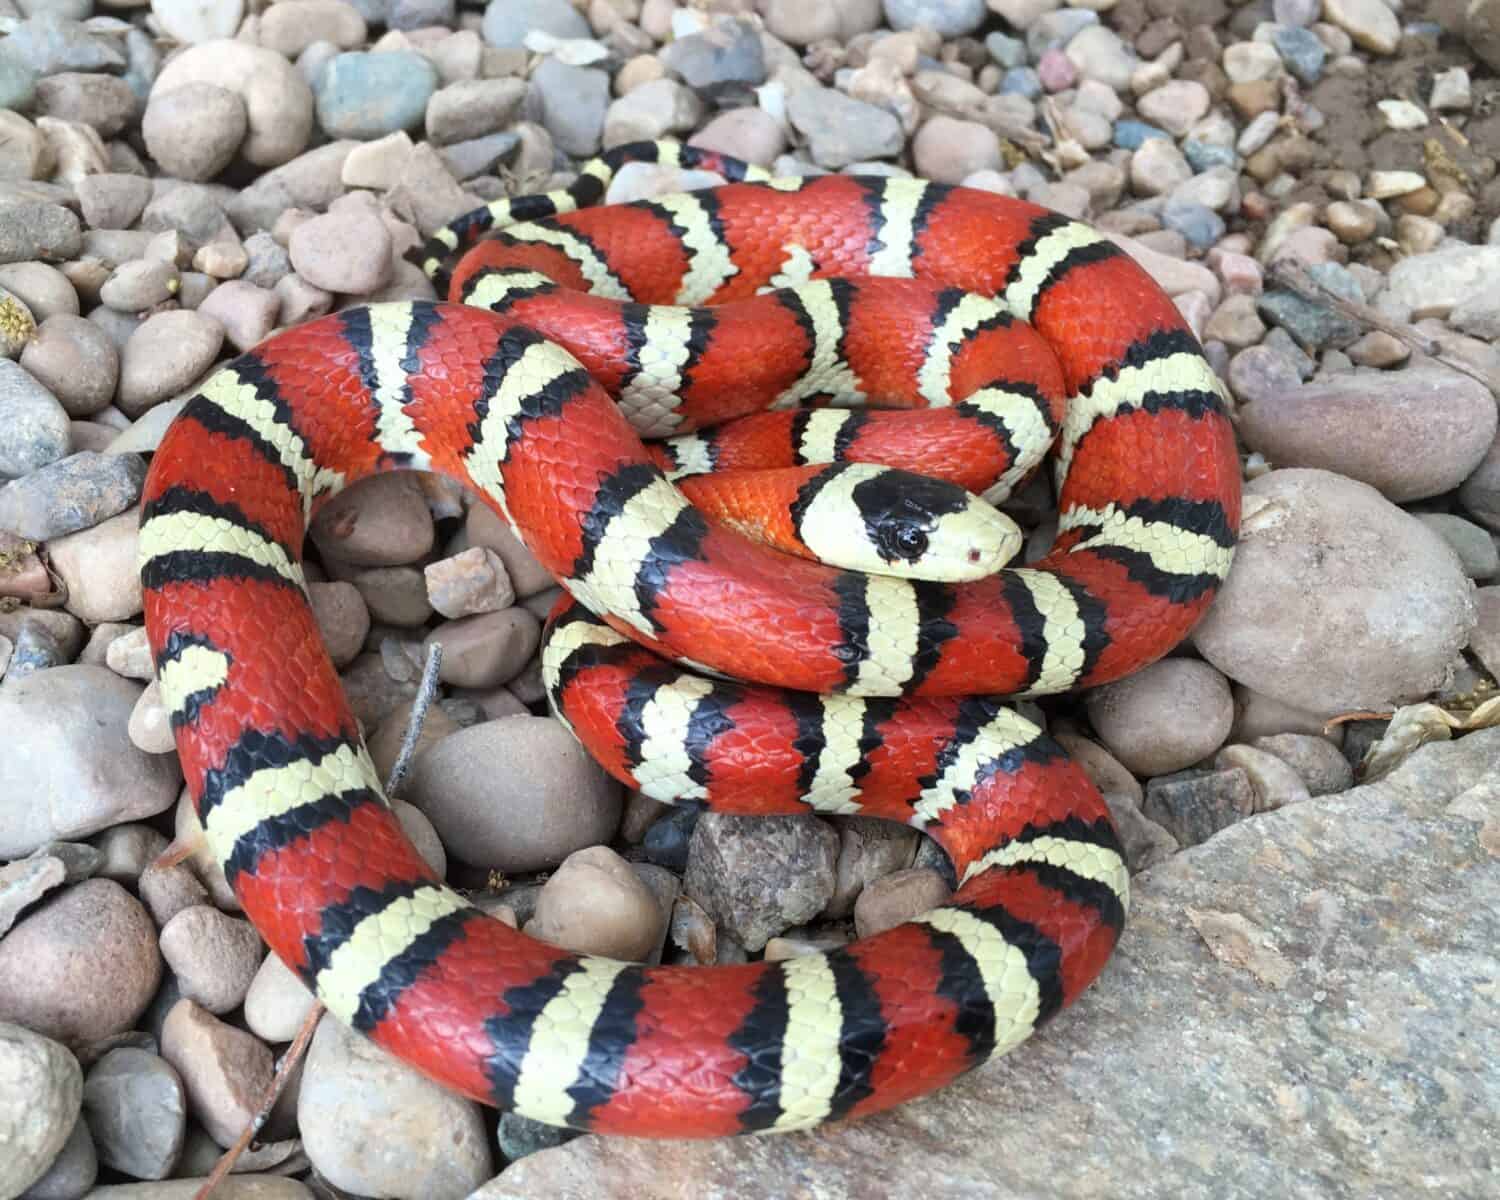 Brightly colored Arizona Mountain Kingsnake, Lampropeltis pyromelana, a Coral Snake mimic, coiled in its habitat